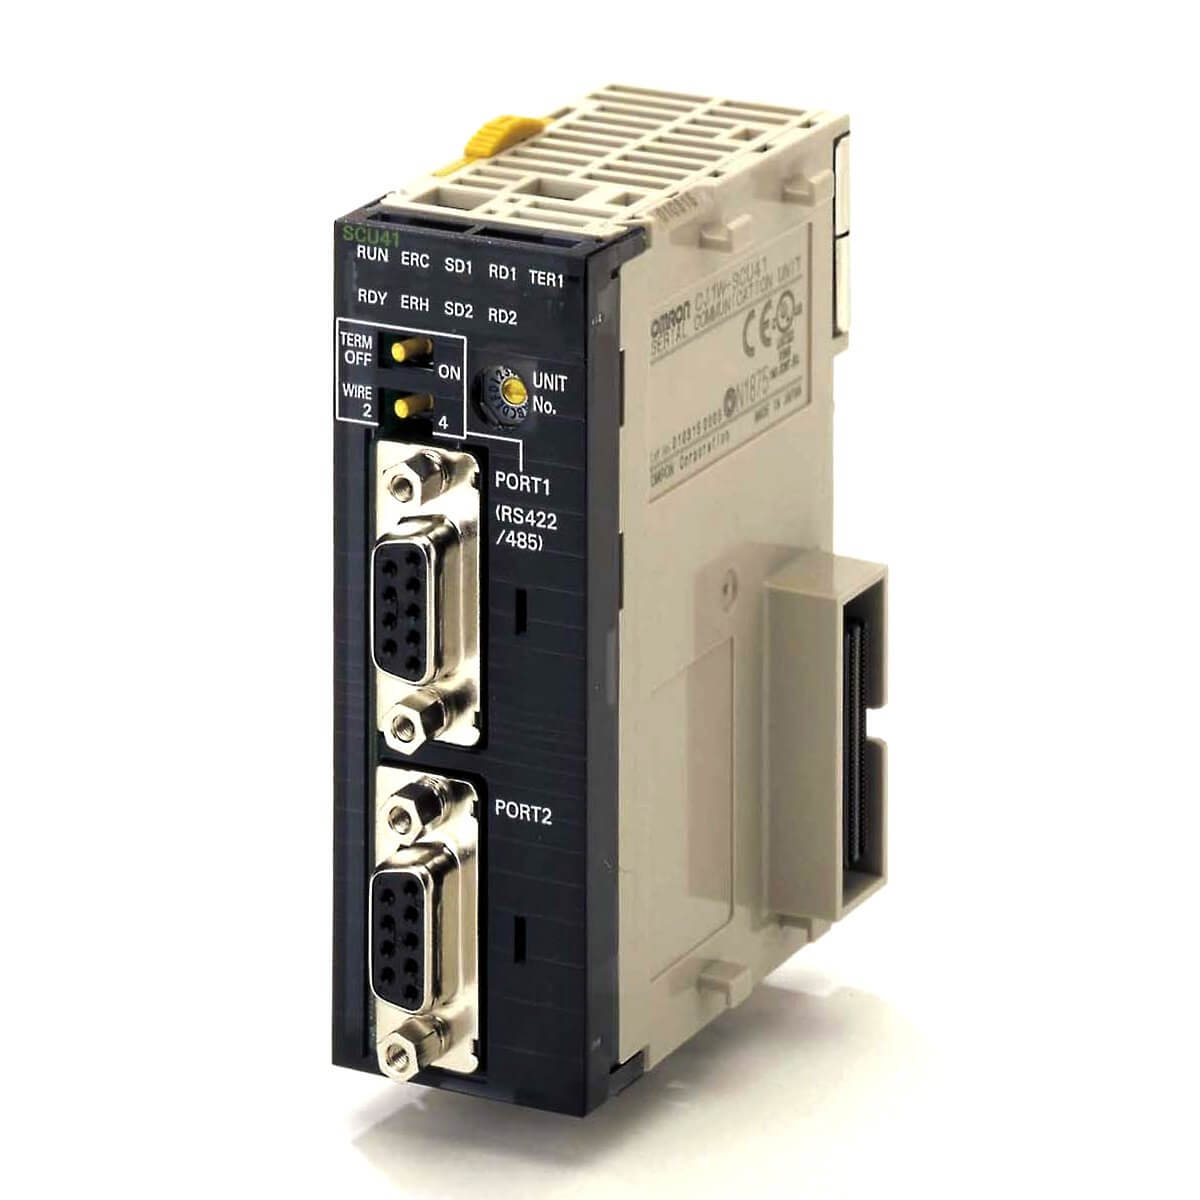 1PCS OMRON Serial Communication Unit CJ1W-SCU41-V1 PLC Brand New In Box